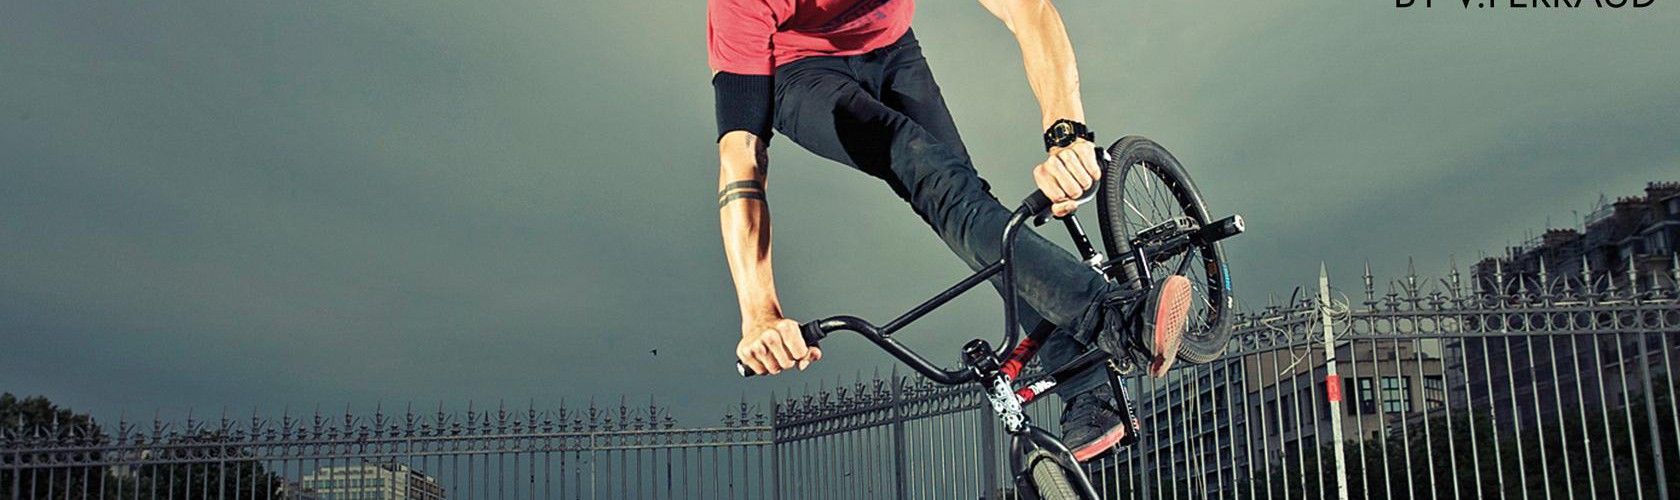 Amazing Bmx Bike Wallpaper Background - Free Download HD Wallpapers